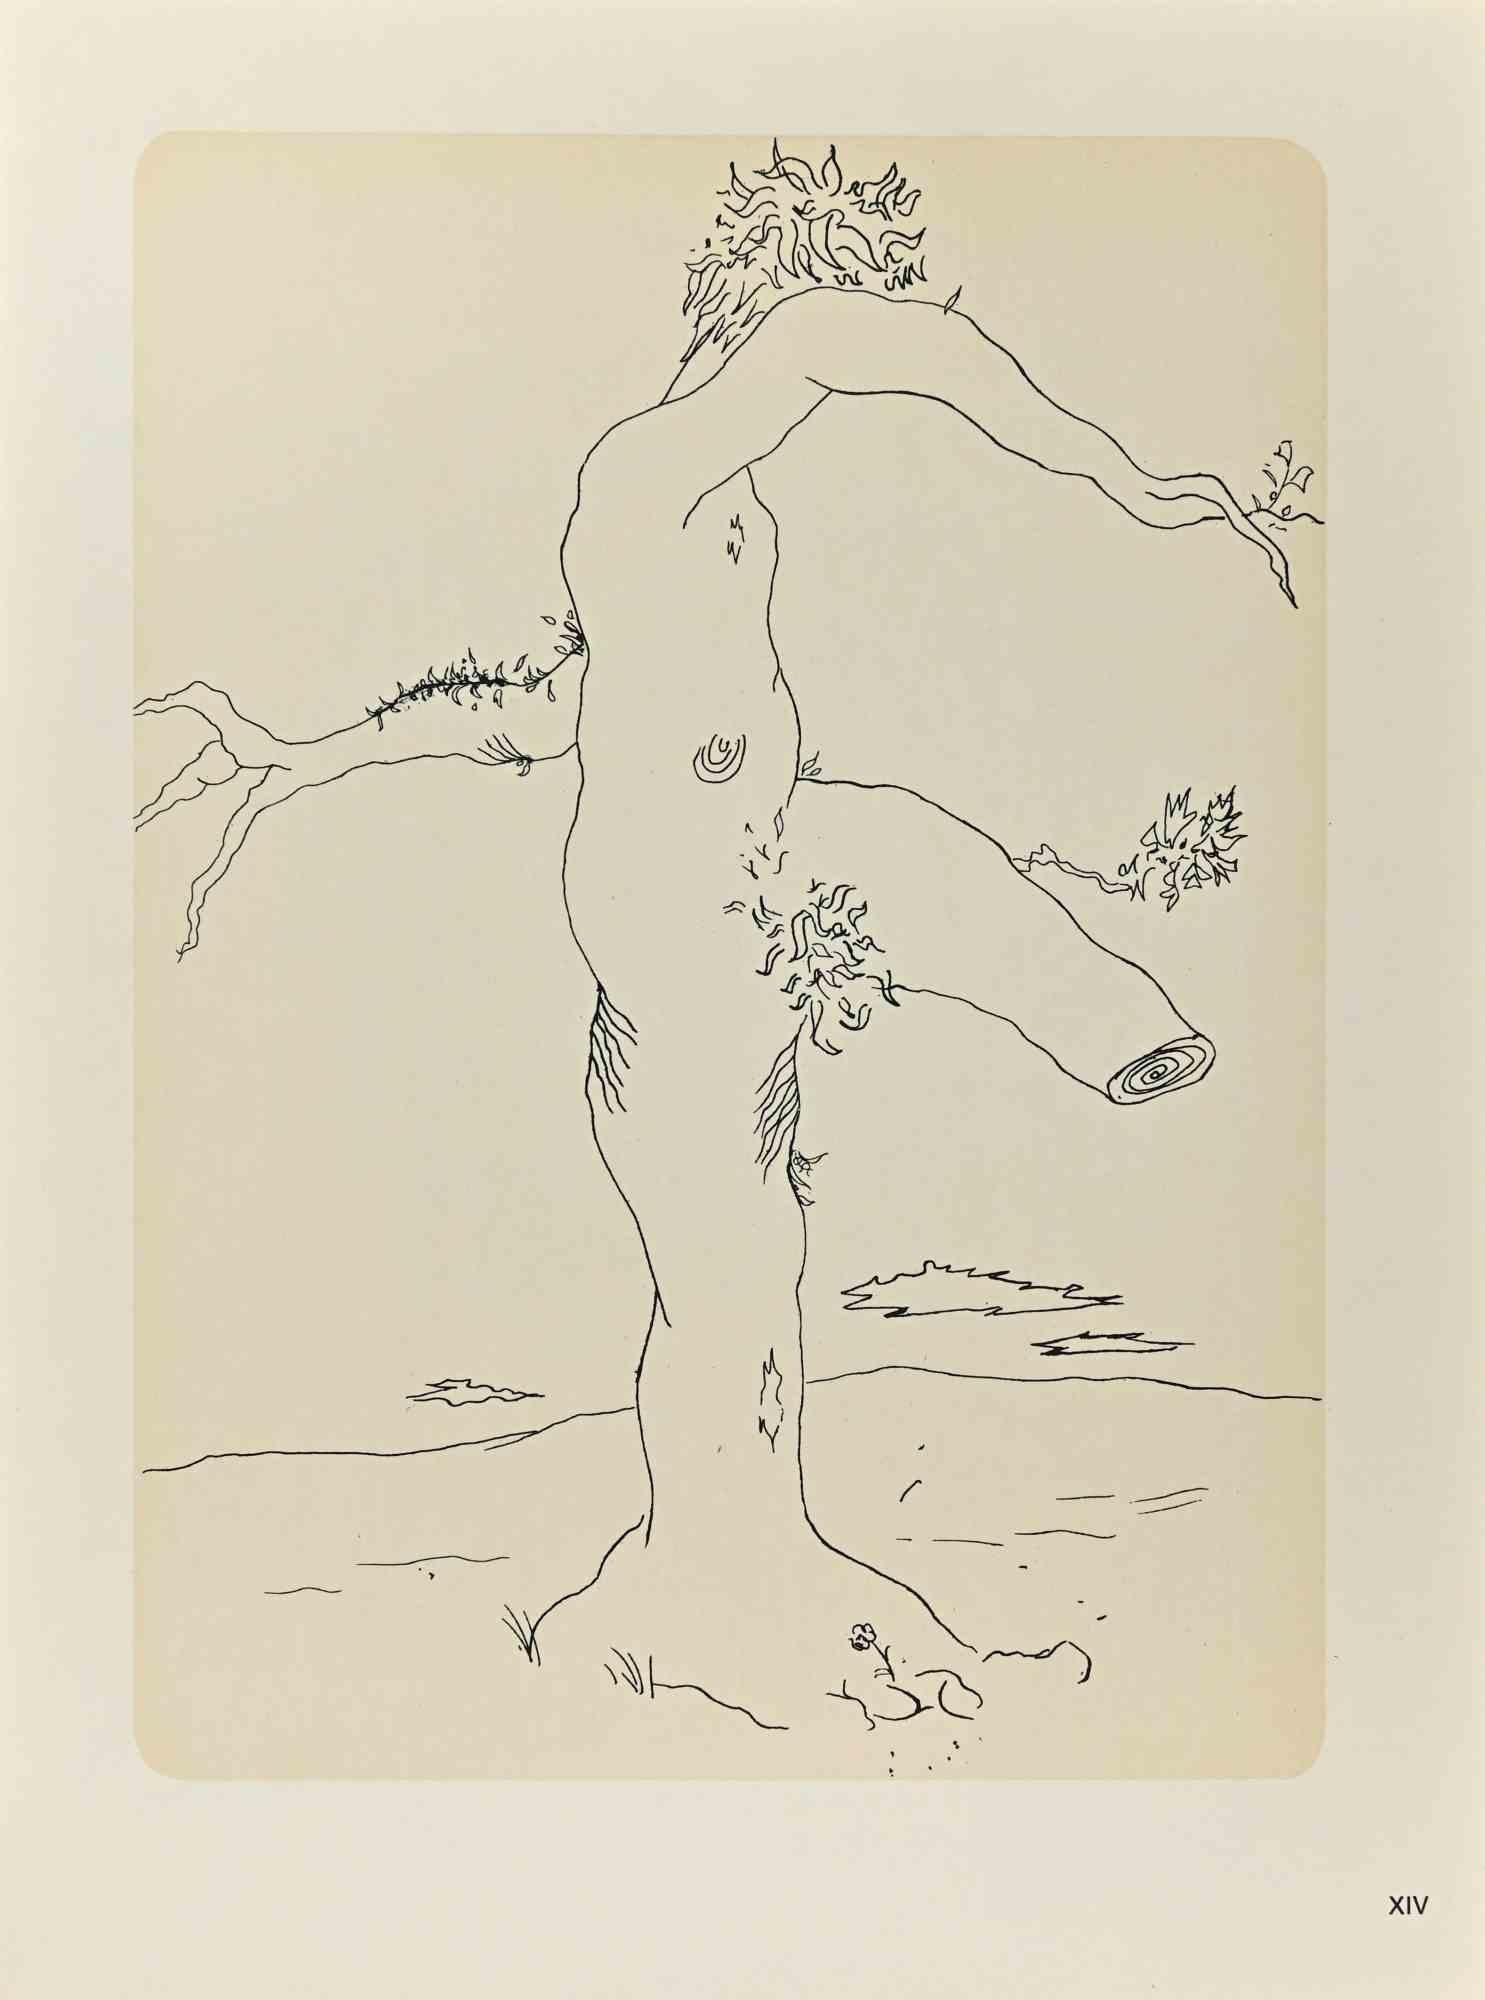 Emmanuel Peillet Figurative Print - Tree-Man - Phototype print by Latis - 1970s